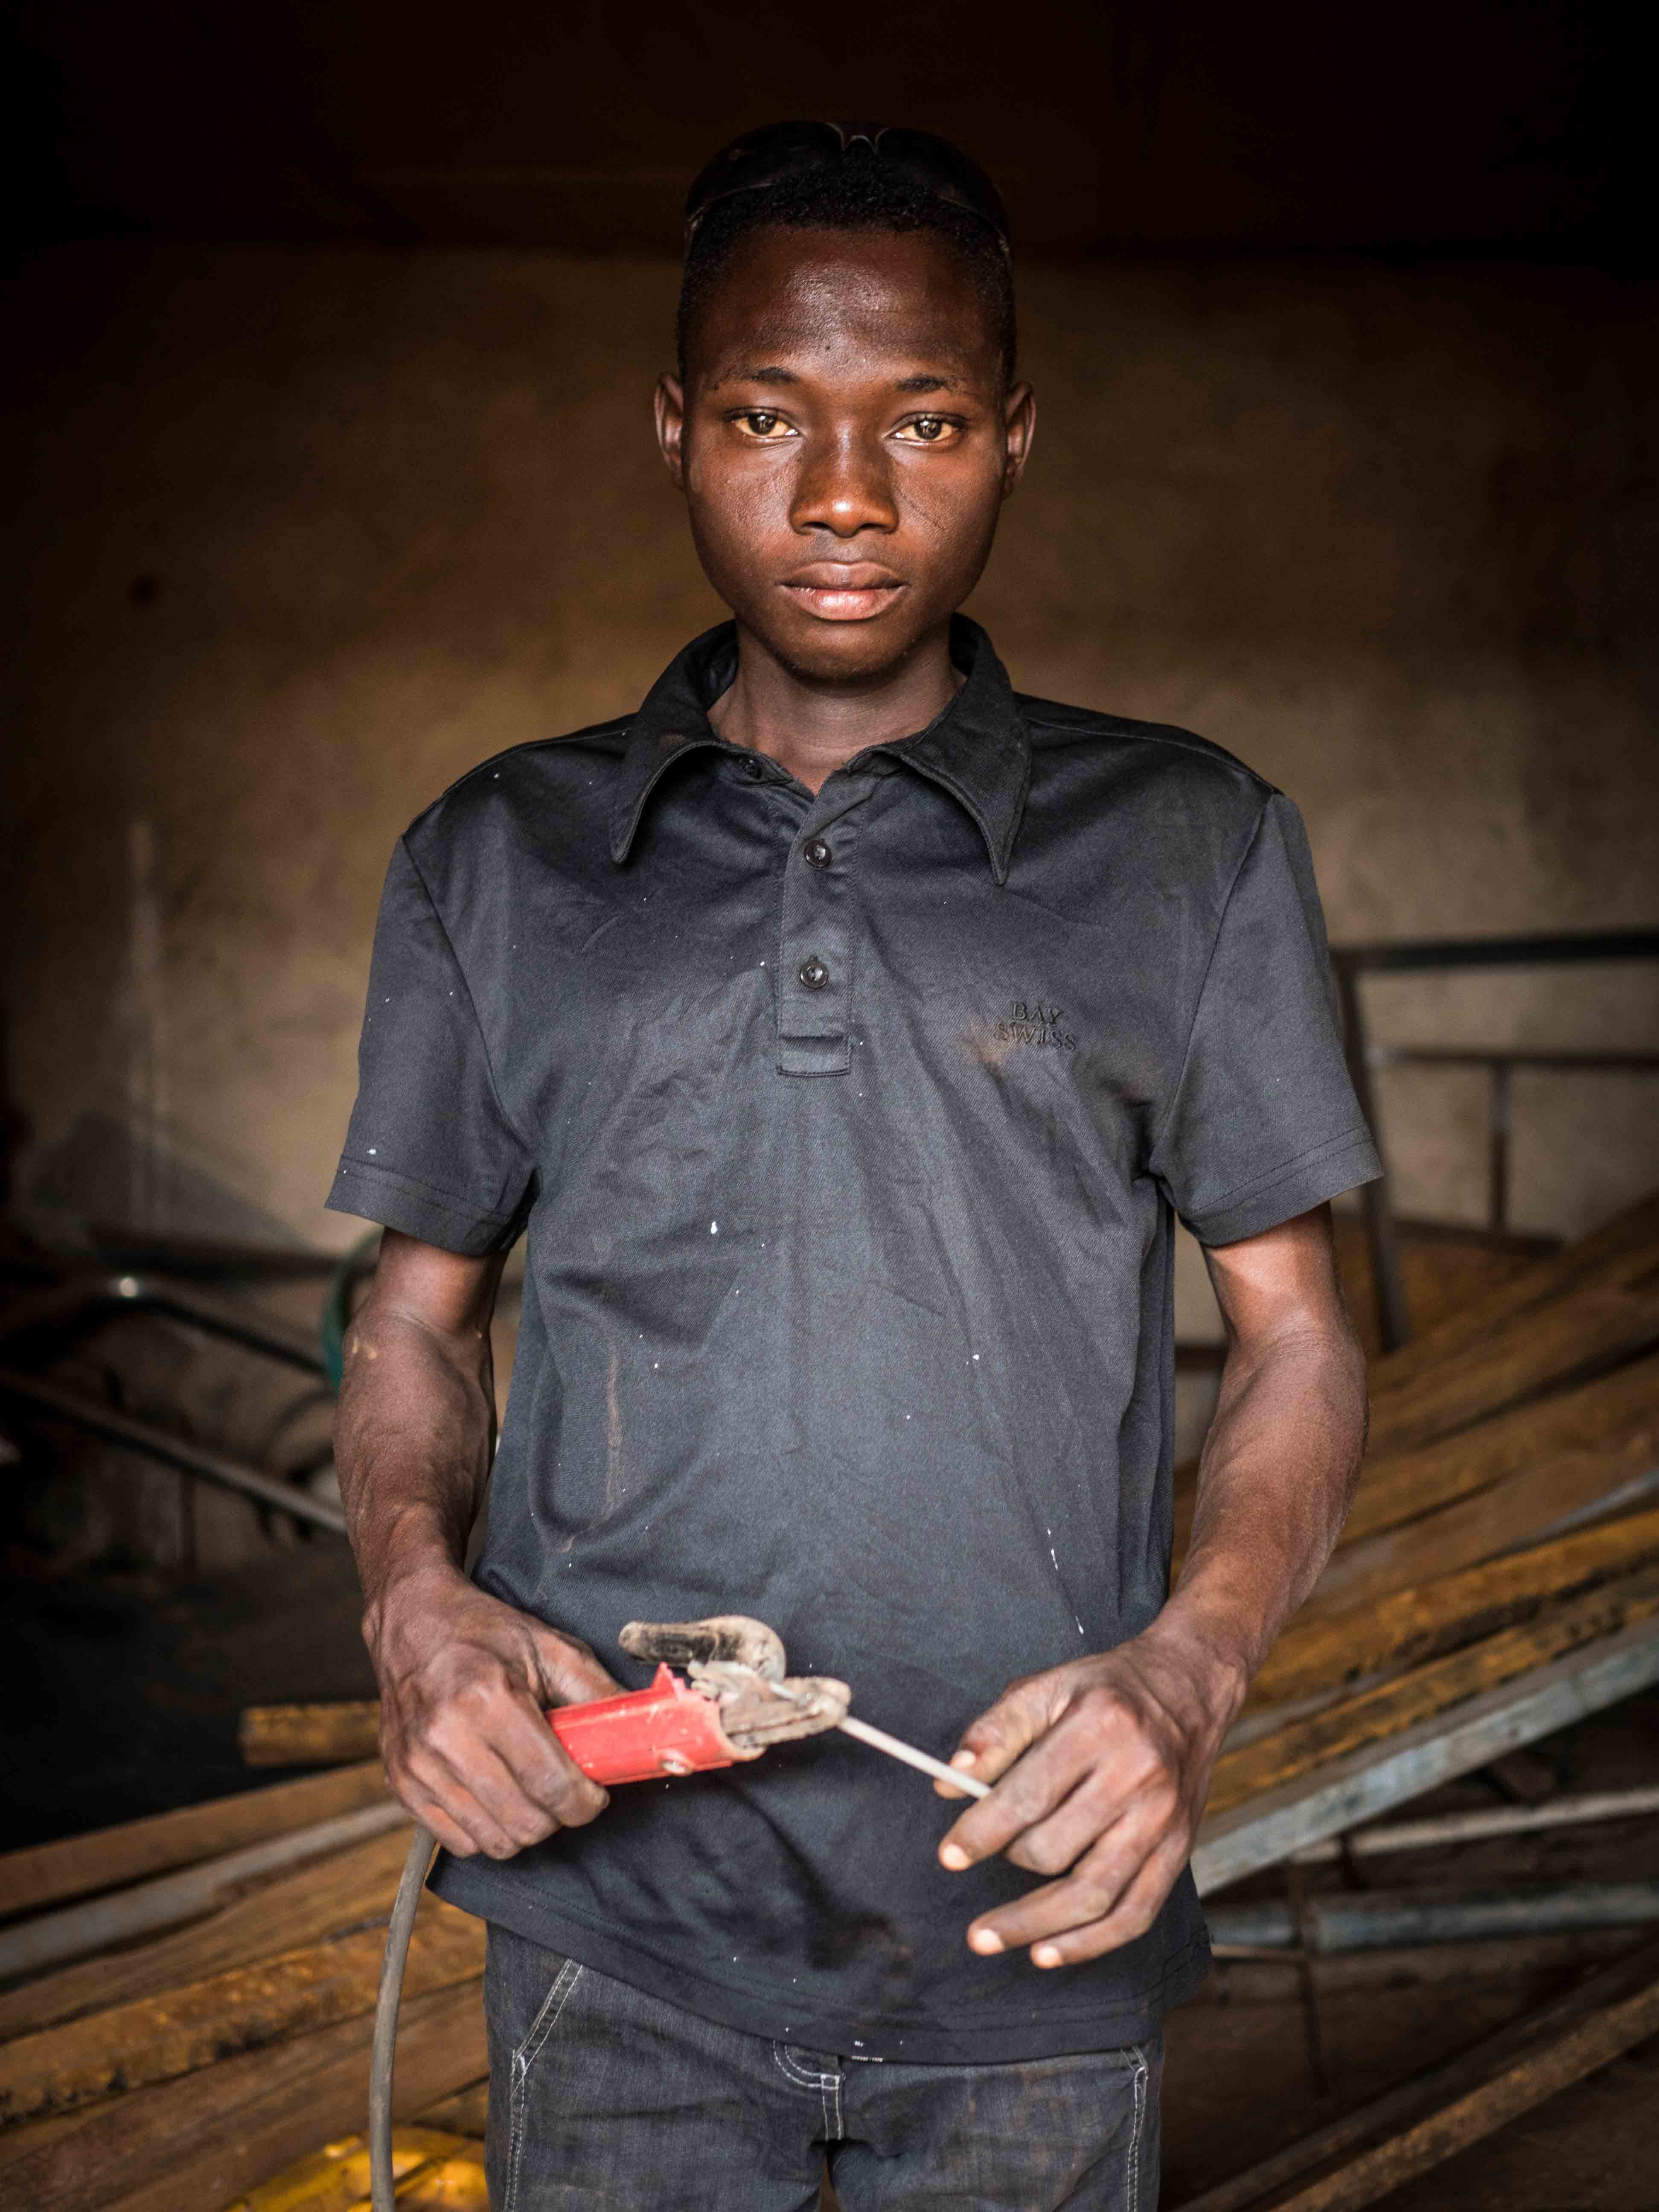 Trainee at welding workshop, Ghana